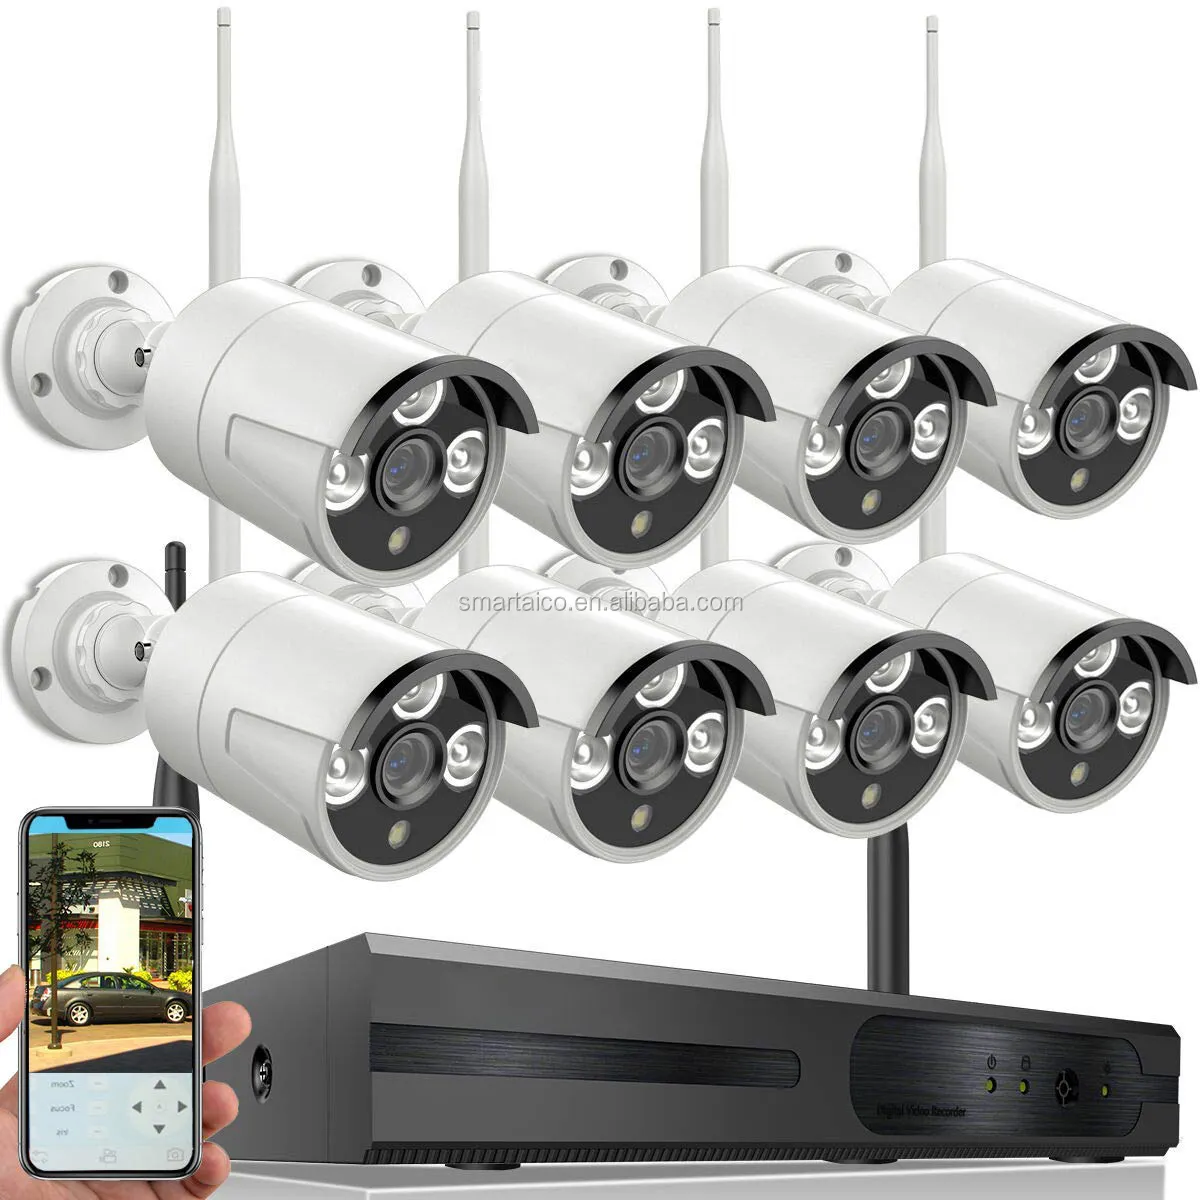 AIPOTEC חמה מכירות 8 ערוצים CCTV מצלמה מערכת אלחוטי WiFi H.265 1080p IP מצלמה כל אחד Nvr ערכה